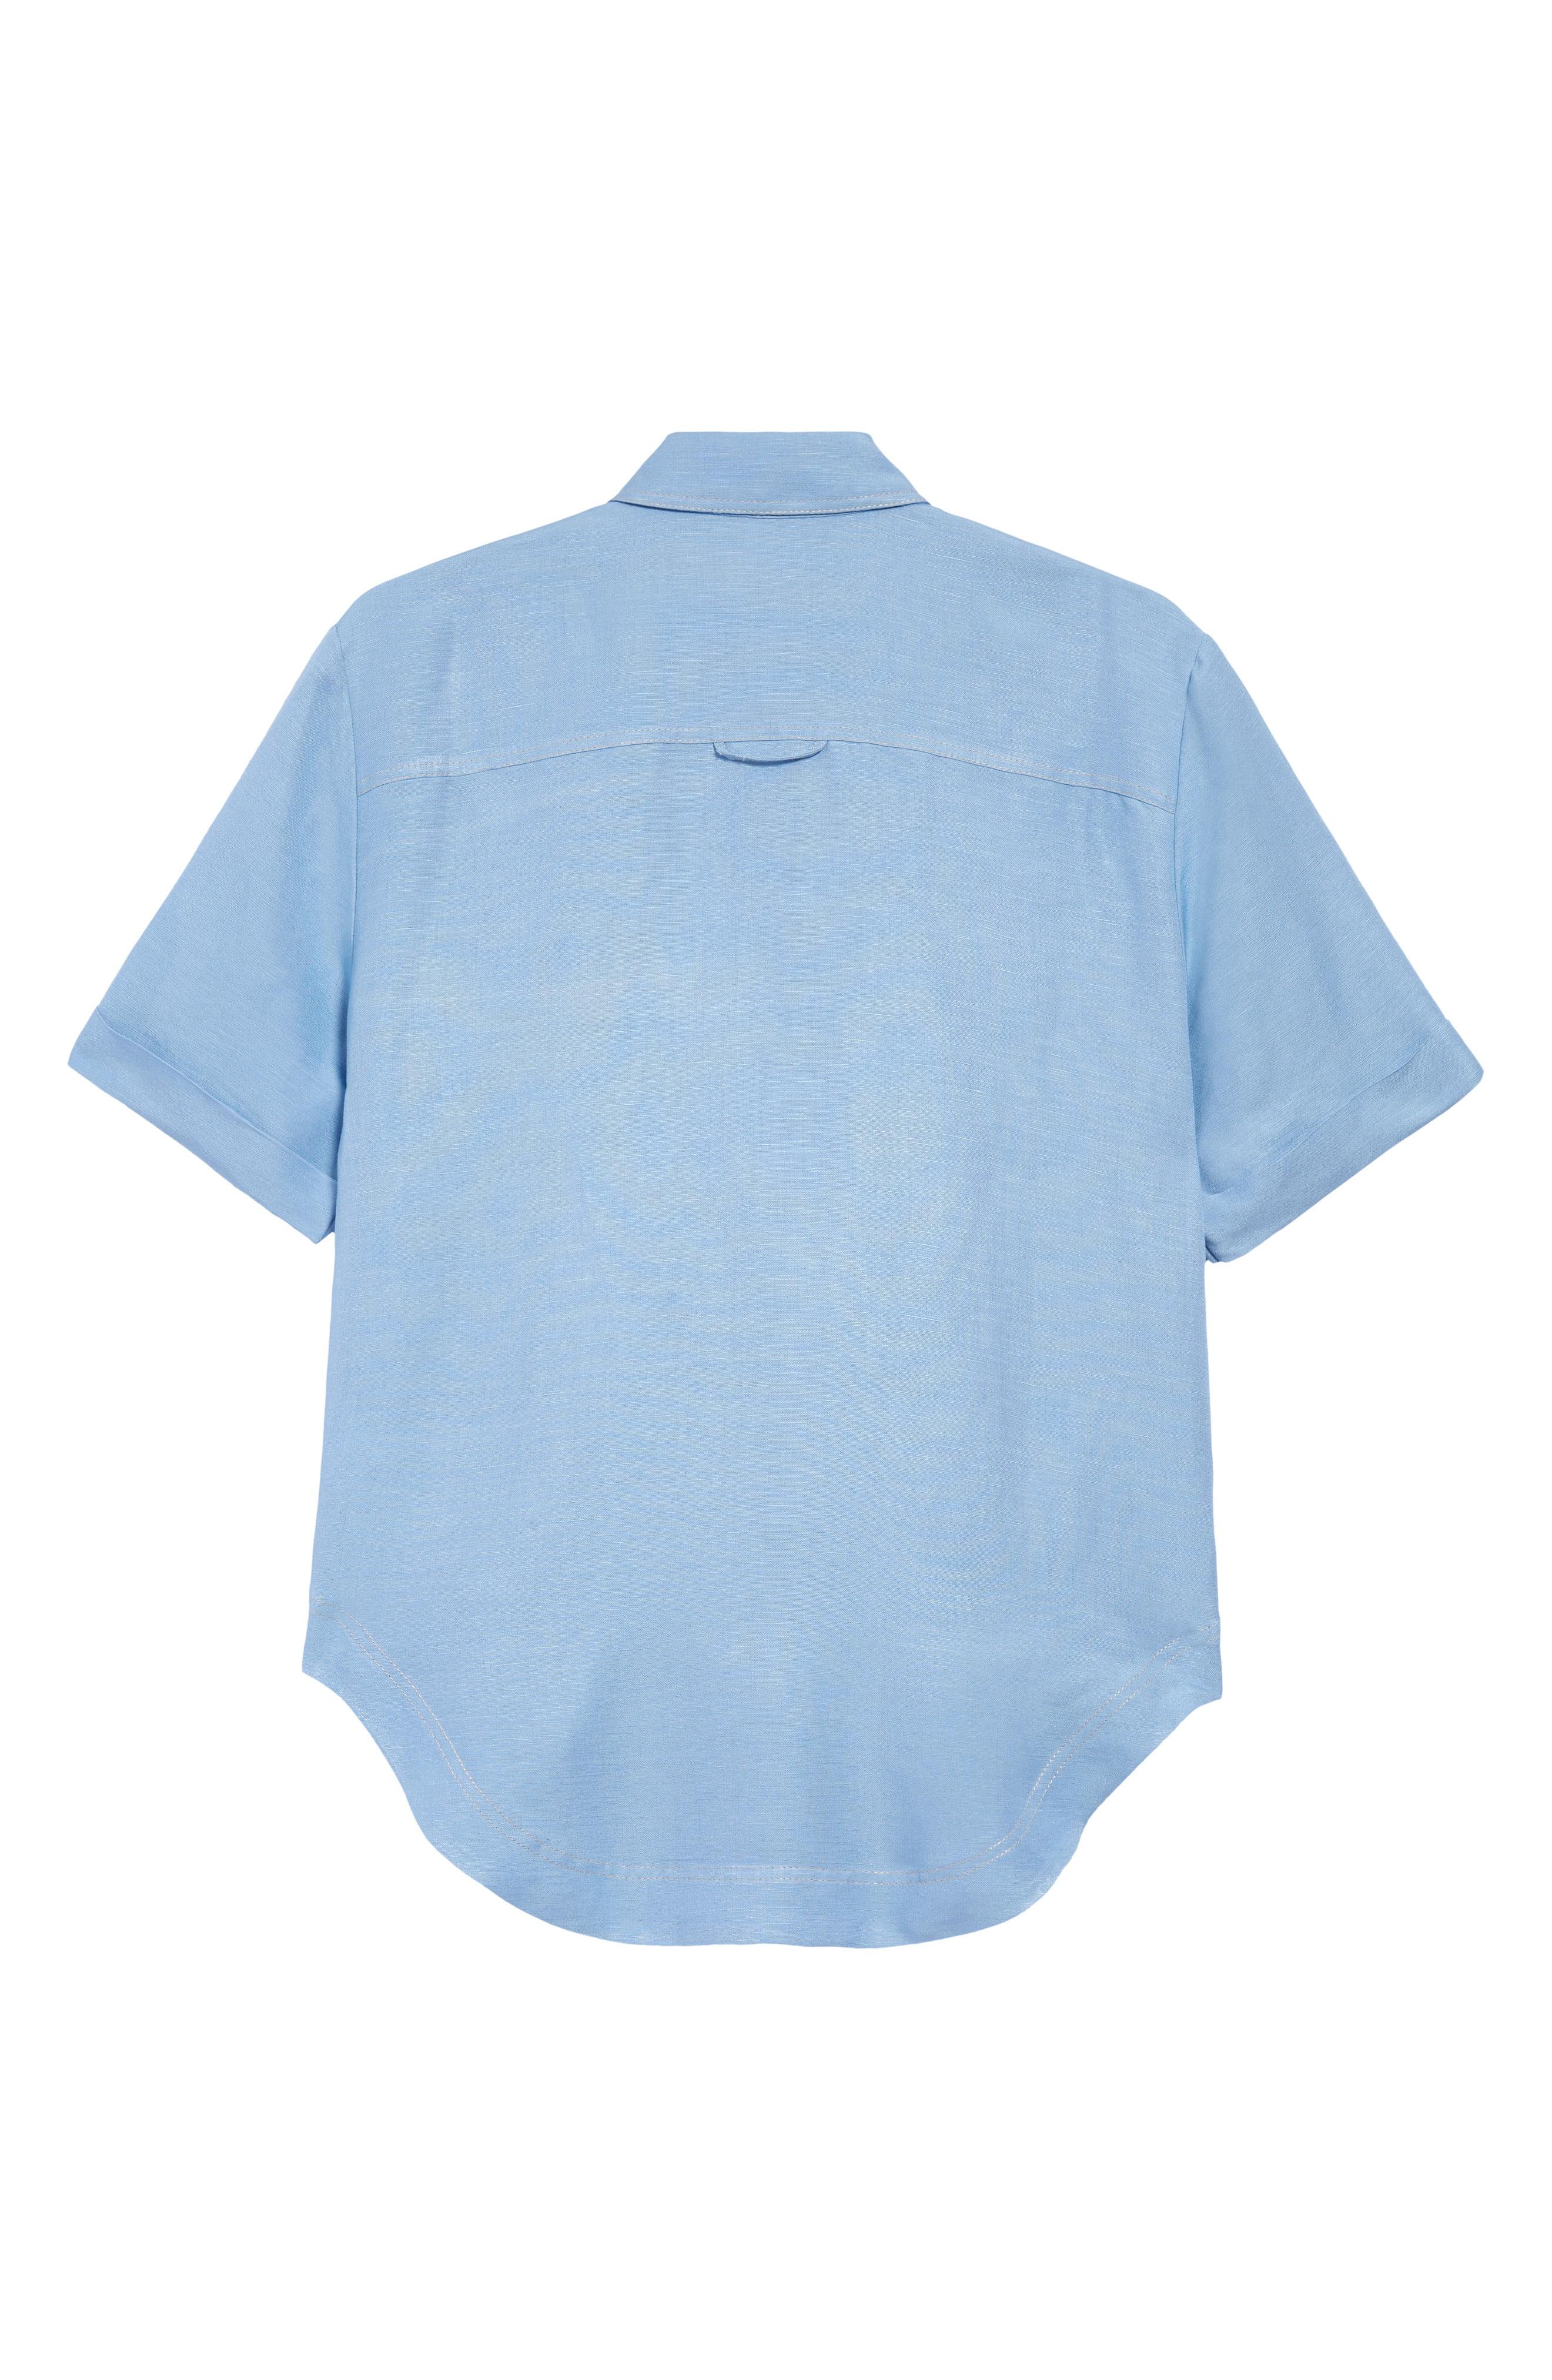 Aje. Overture Oversize Linen Blend Shirt in Blue - Lyst